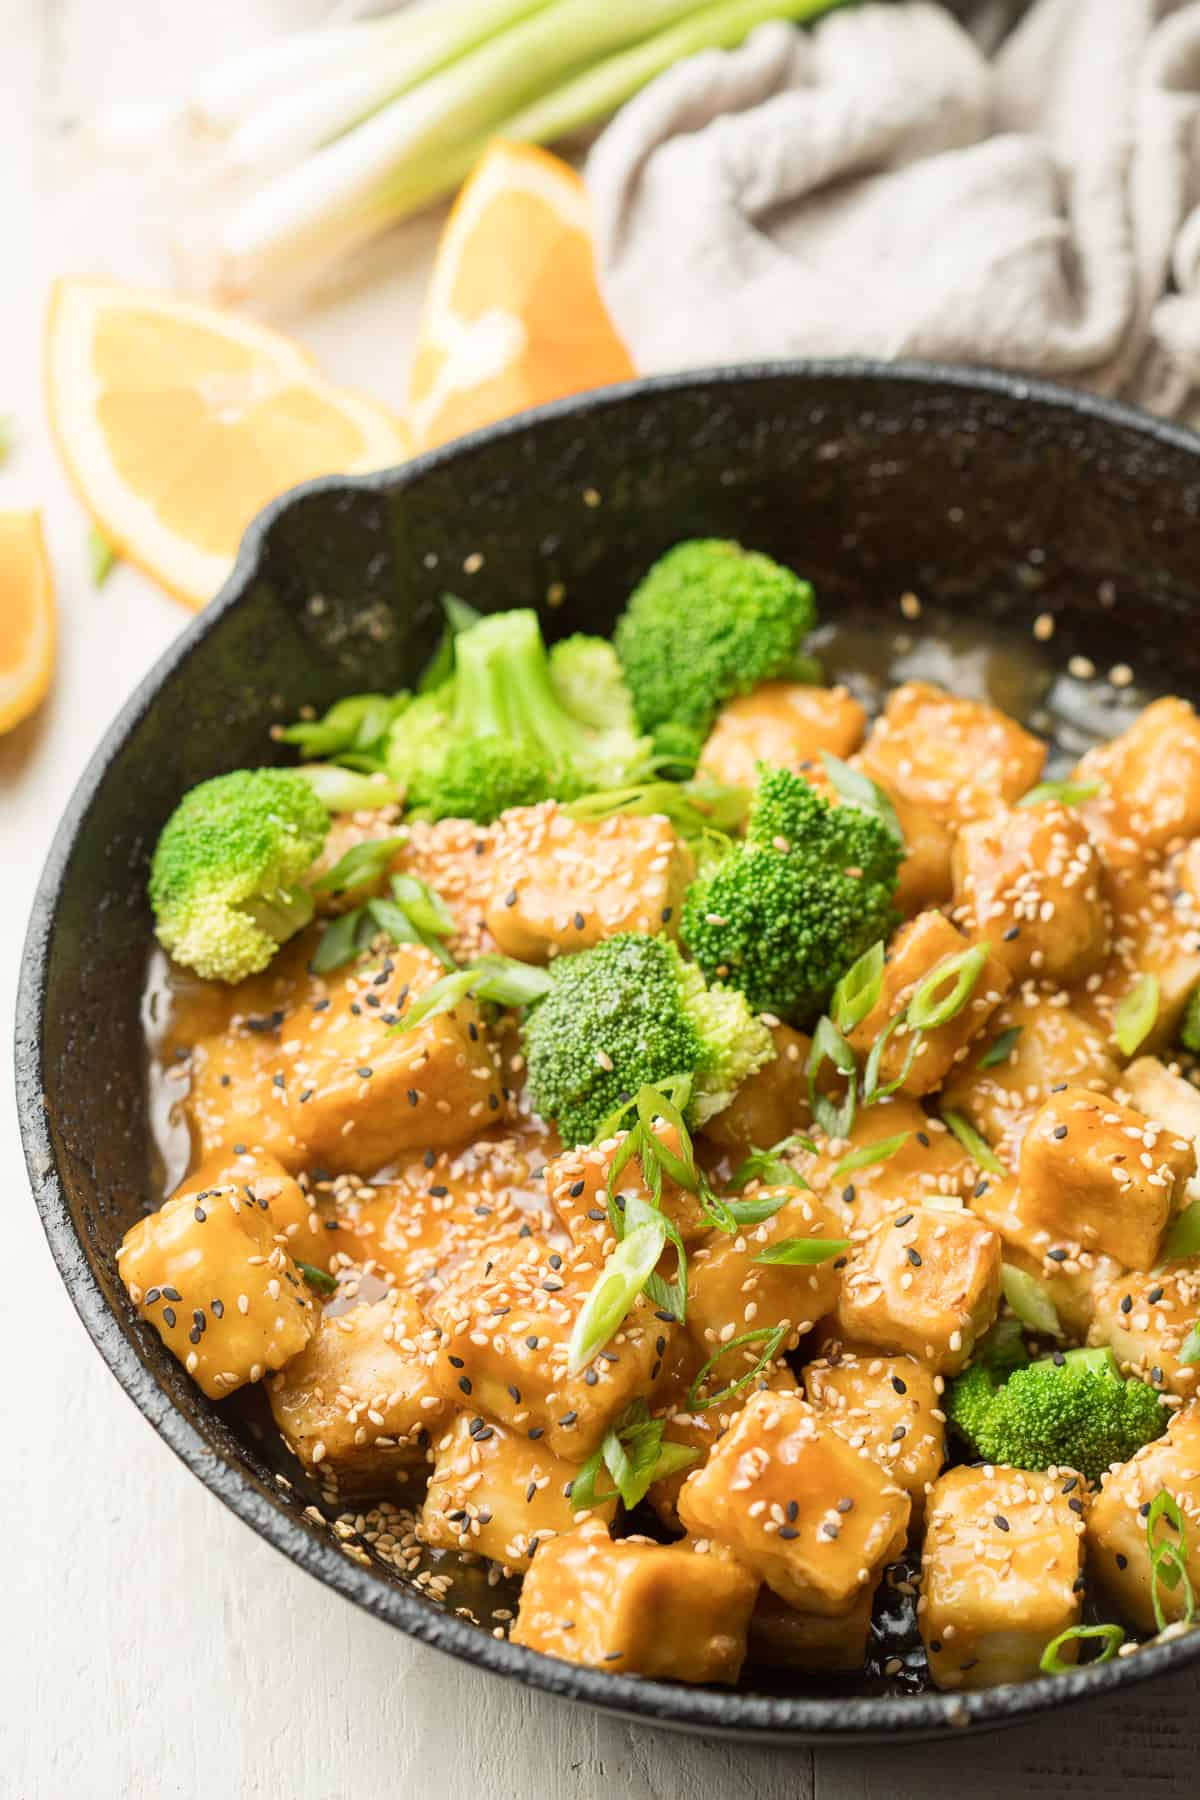 Skillet of Crispy Orange Tofu and Broccoli with Orange Slices in the Background